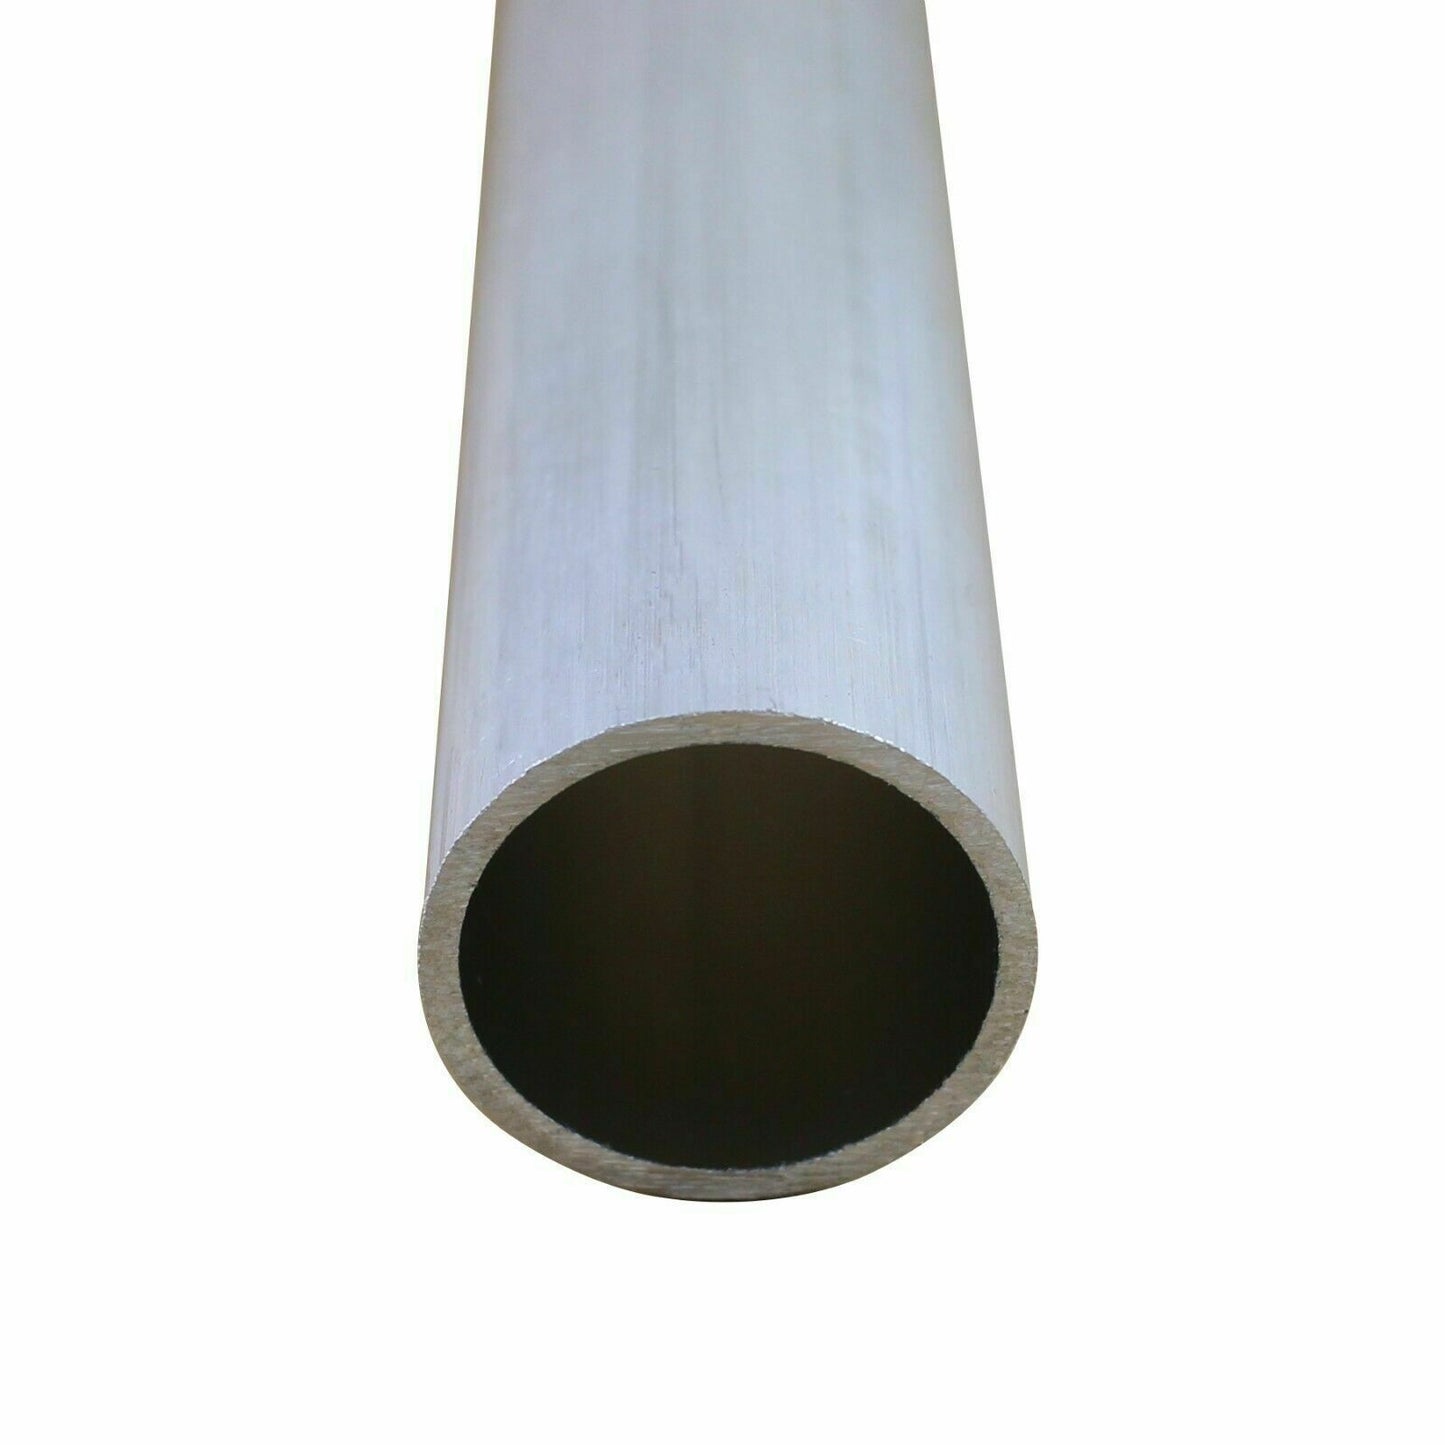 OD 36 mm ID 30 mm 1 Pcs Aluminum Round Tube Pipe